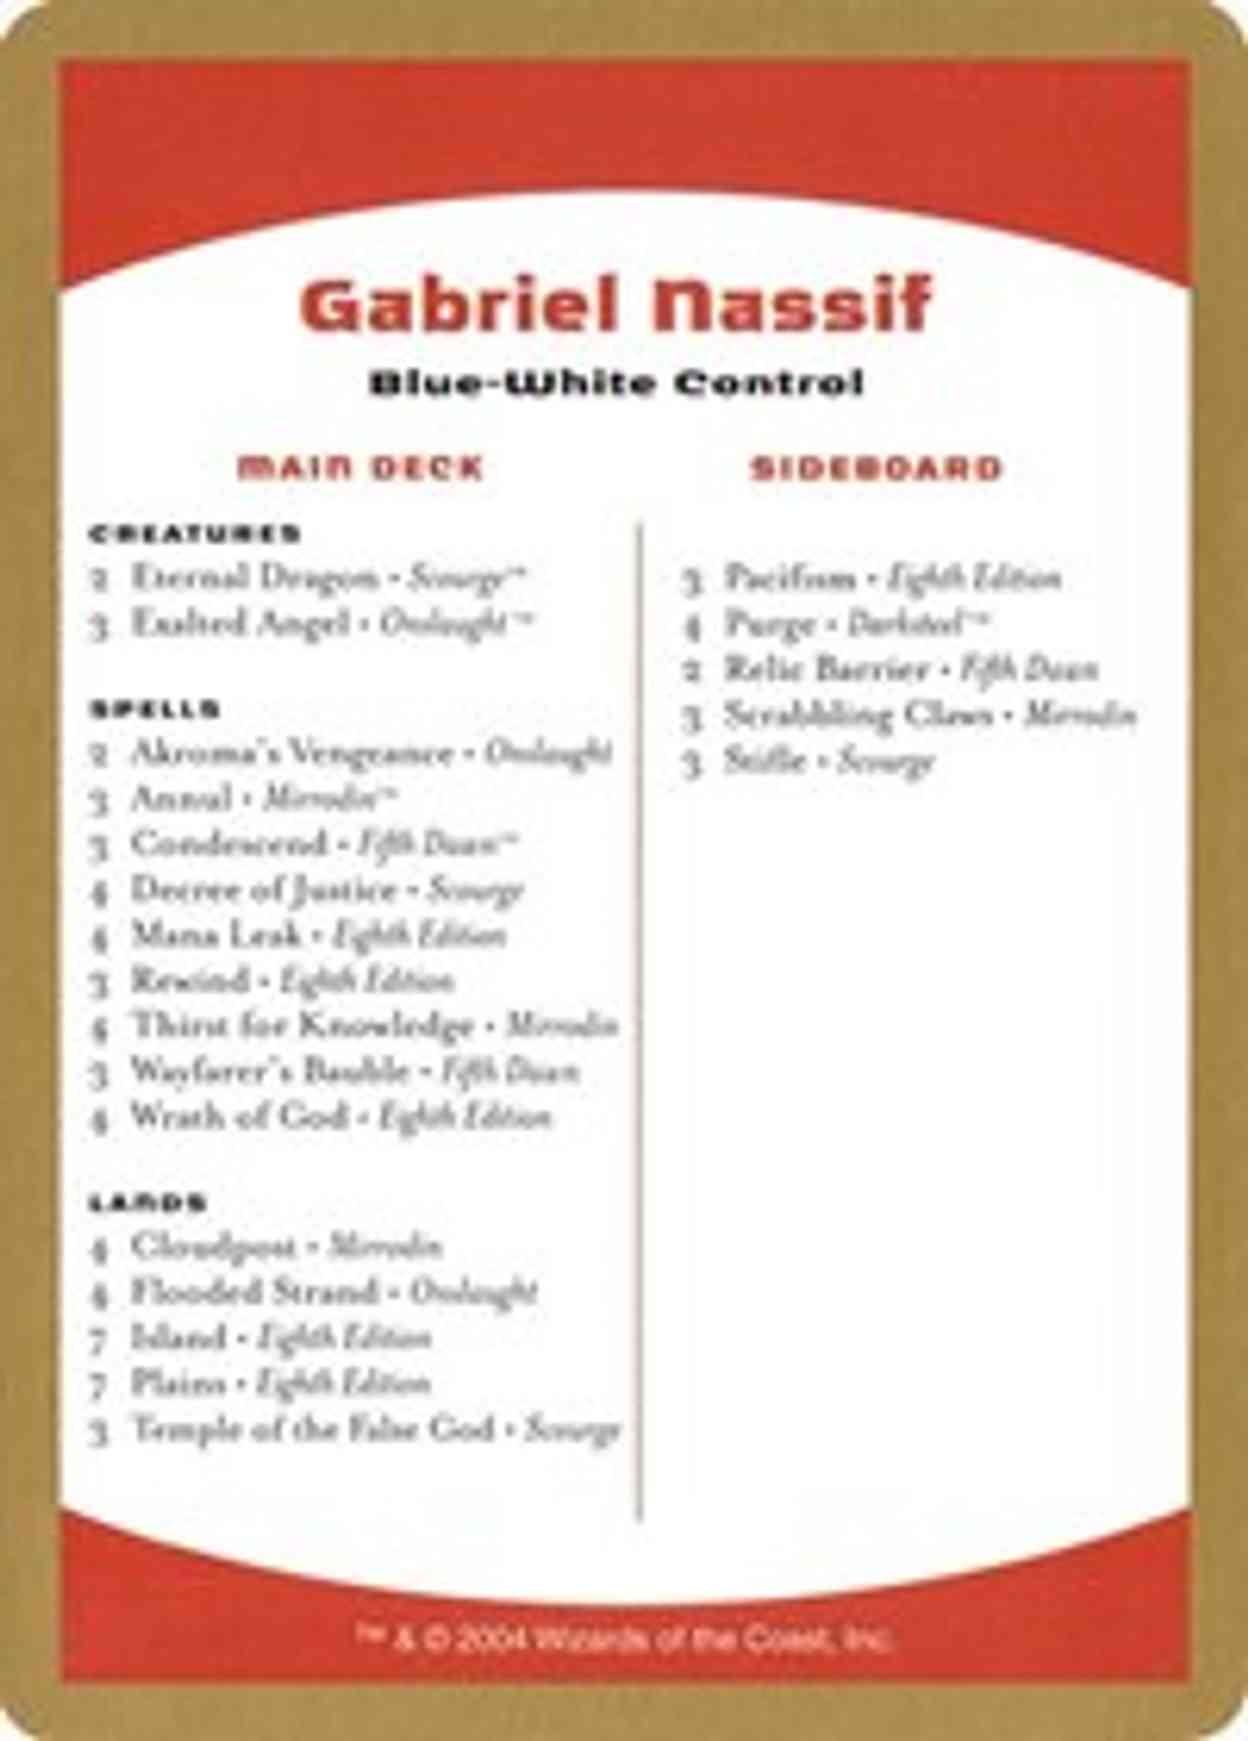 2004 Gabriel Nassif Decklist Card magic card front